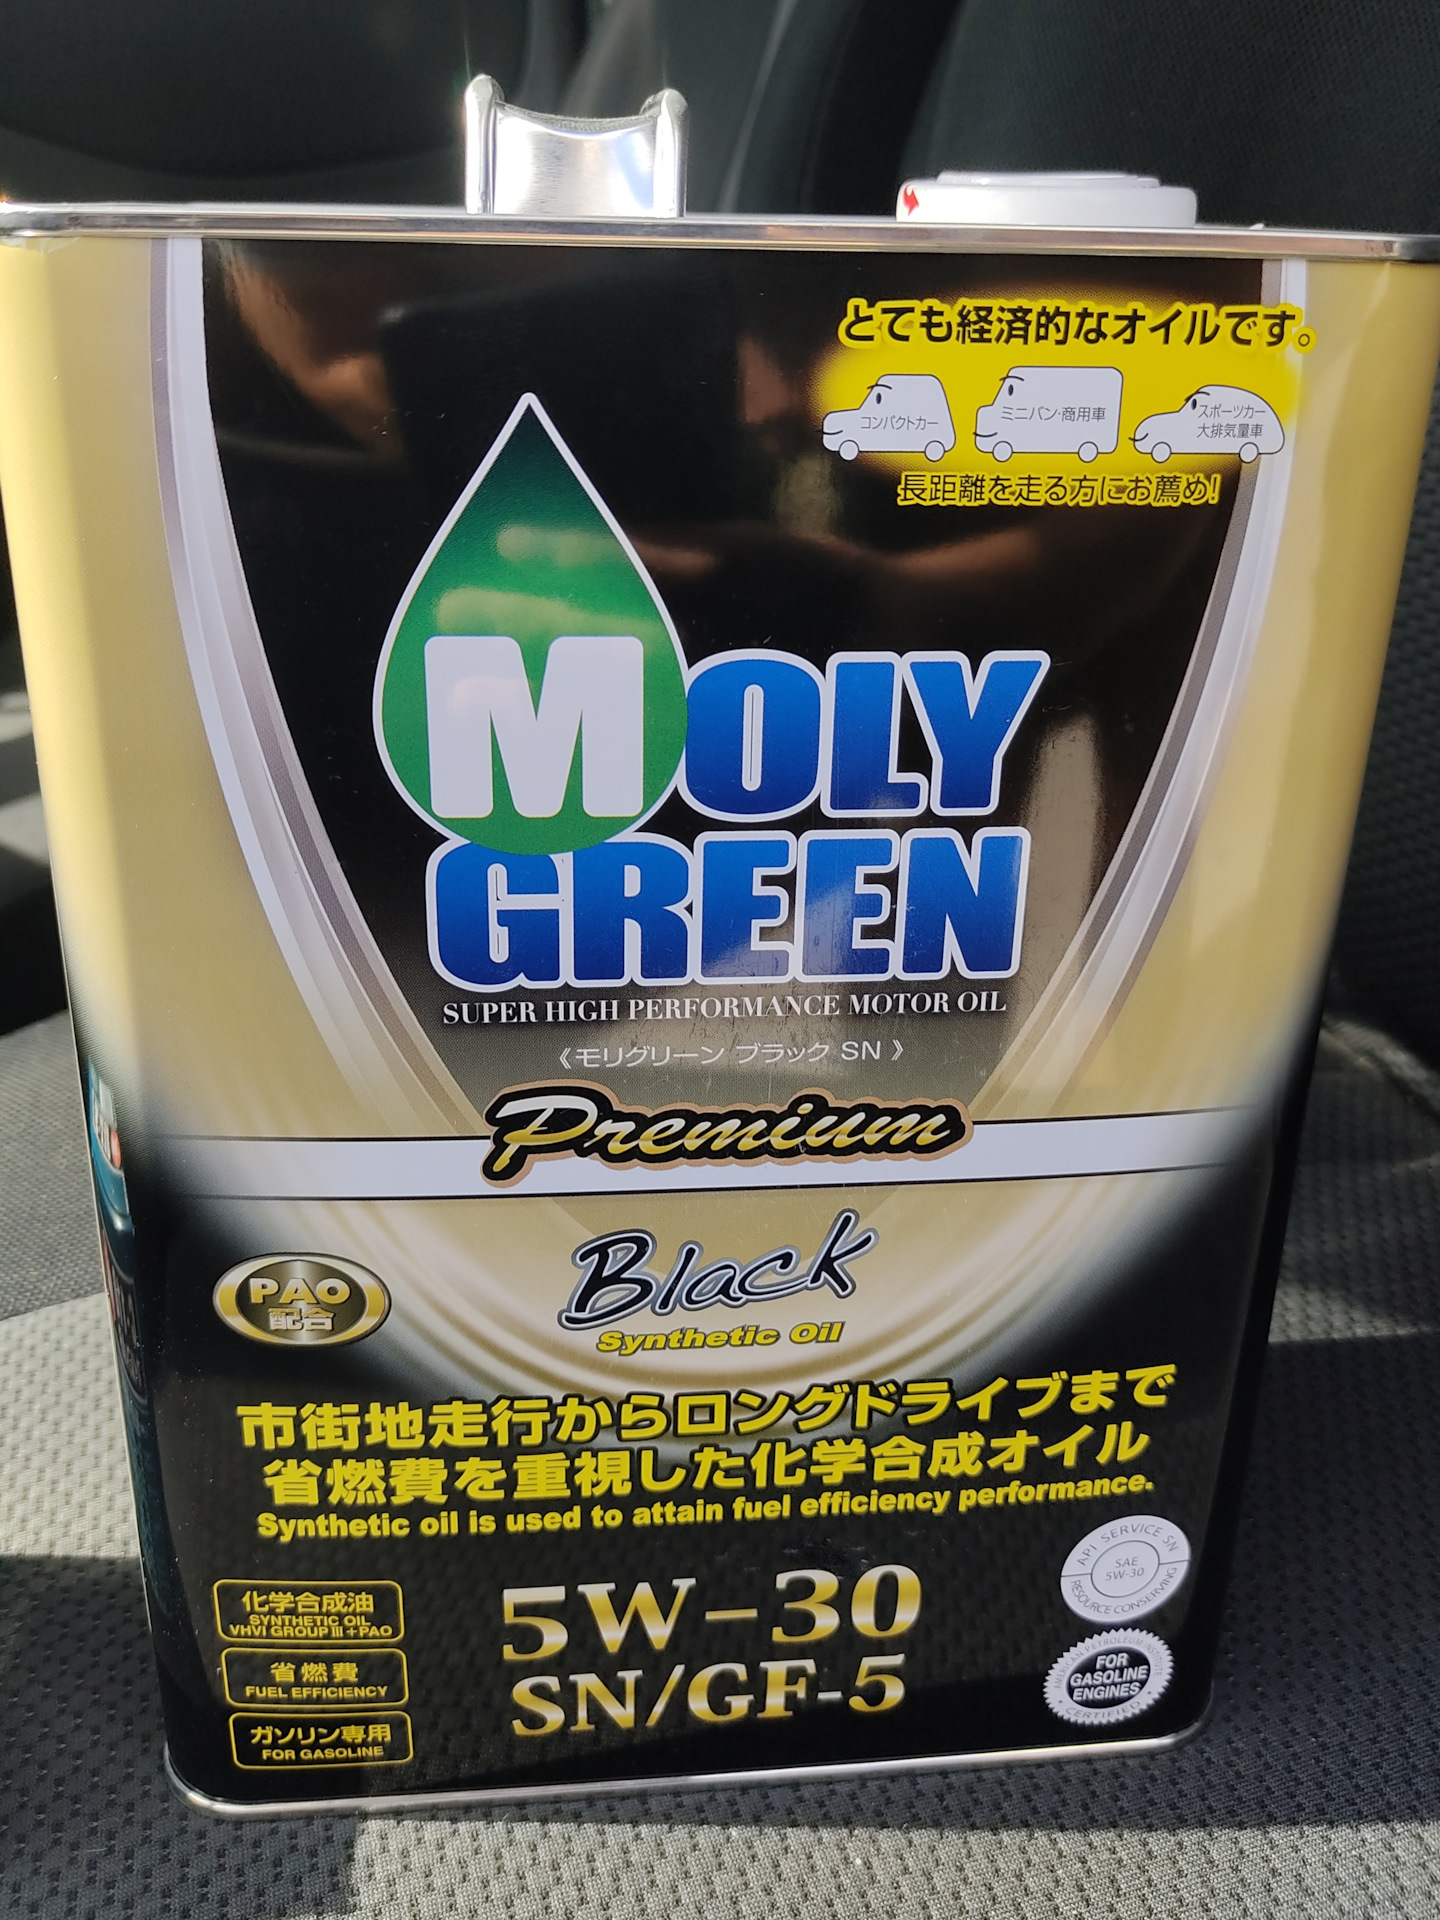 Моли грин 5w30 купить. Моторное масло Moly Green 5w30. Moly Green 5w30 Premium. Moly Green 5w30 Premium Black. Моли Грин премиум 5 30.